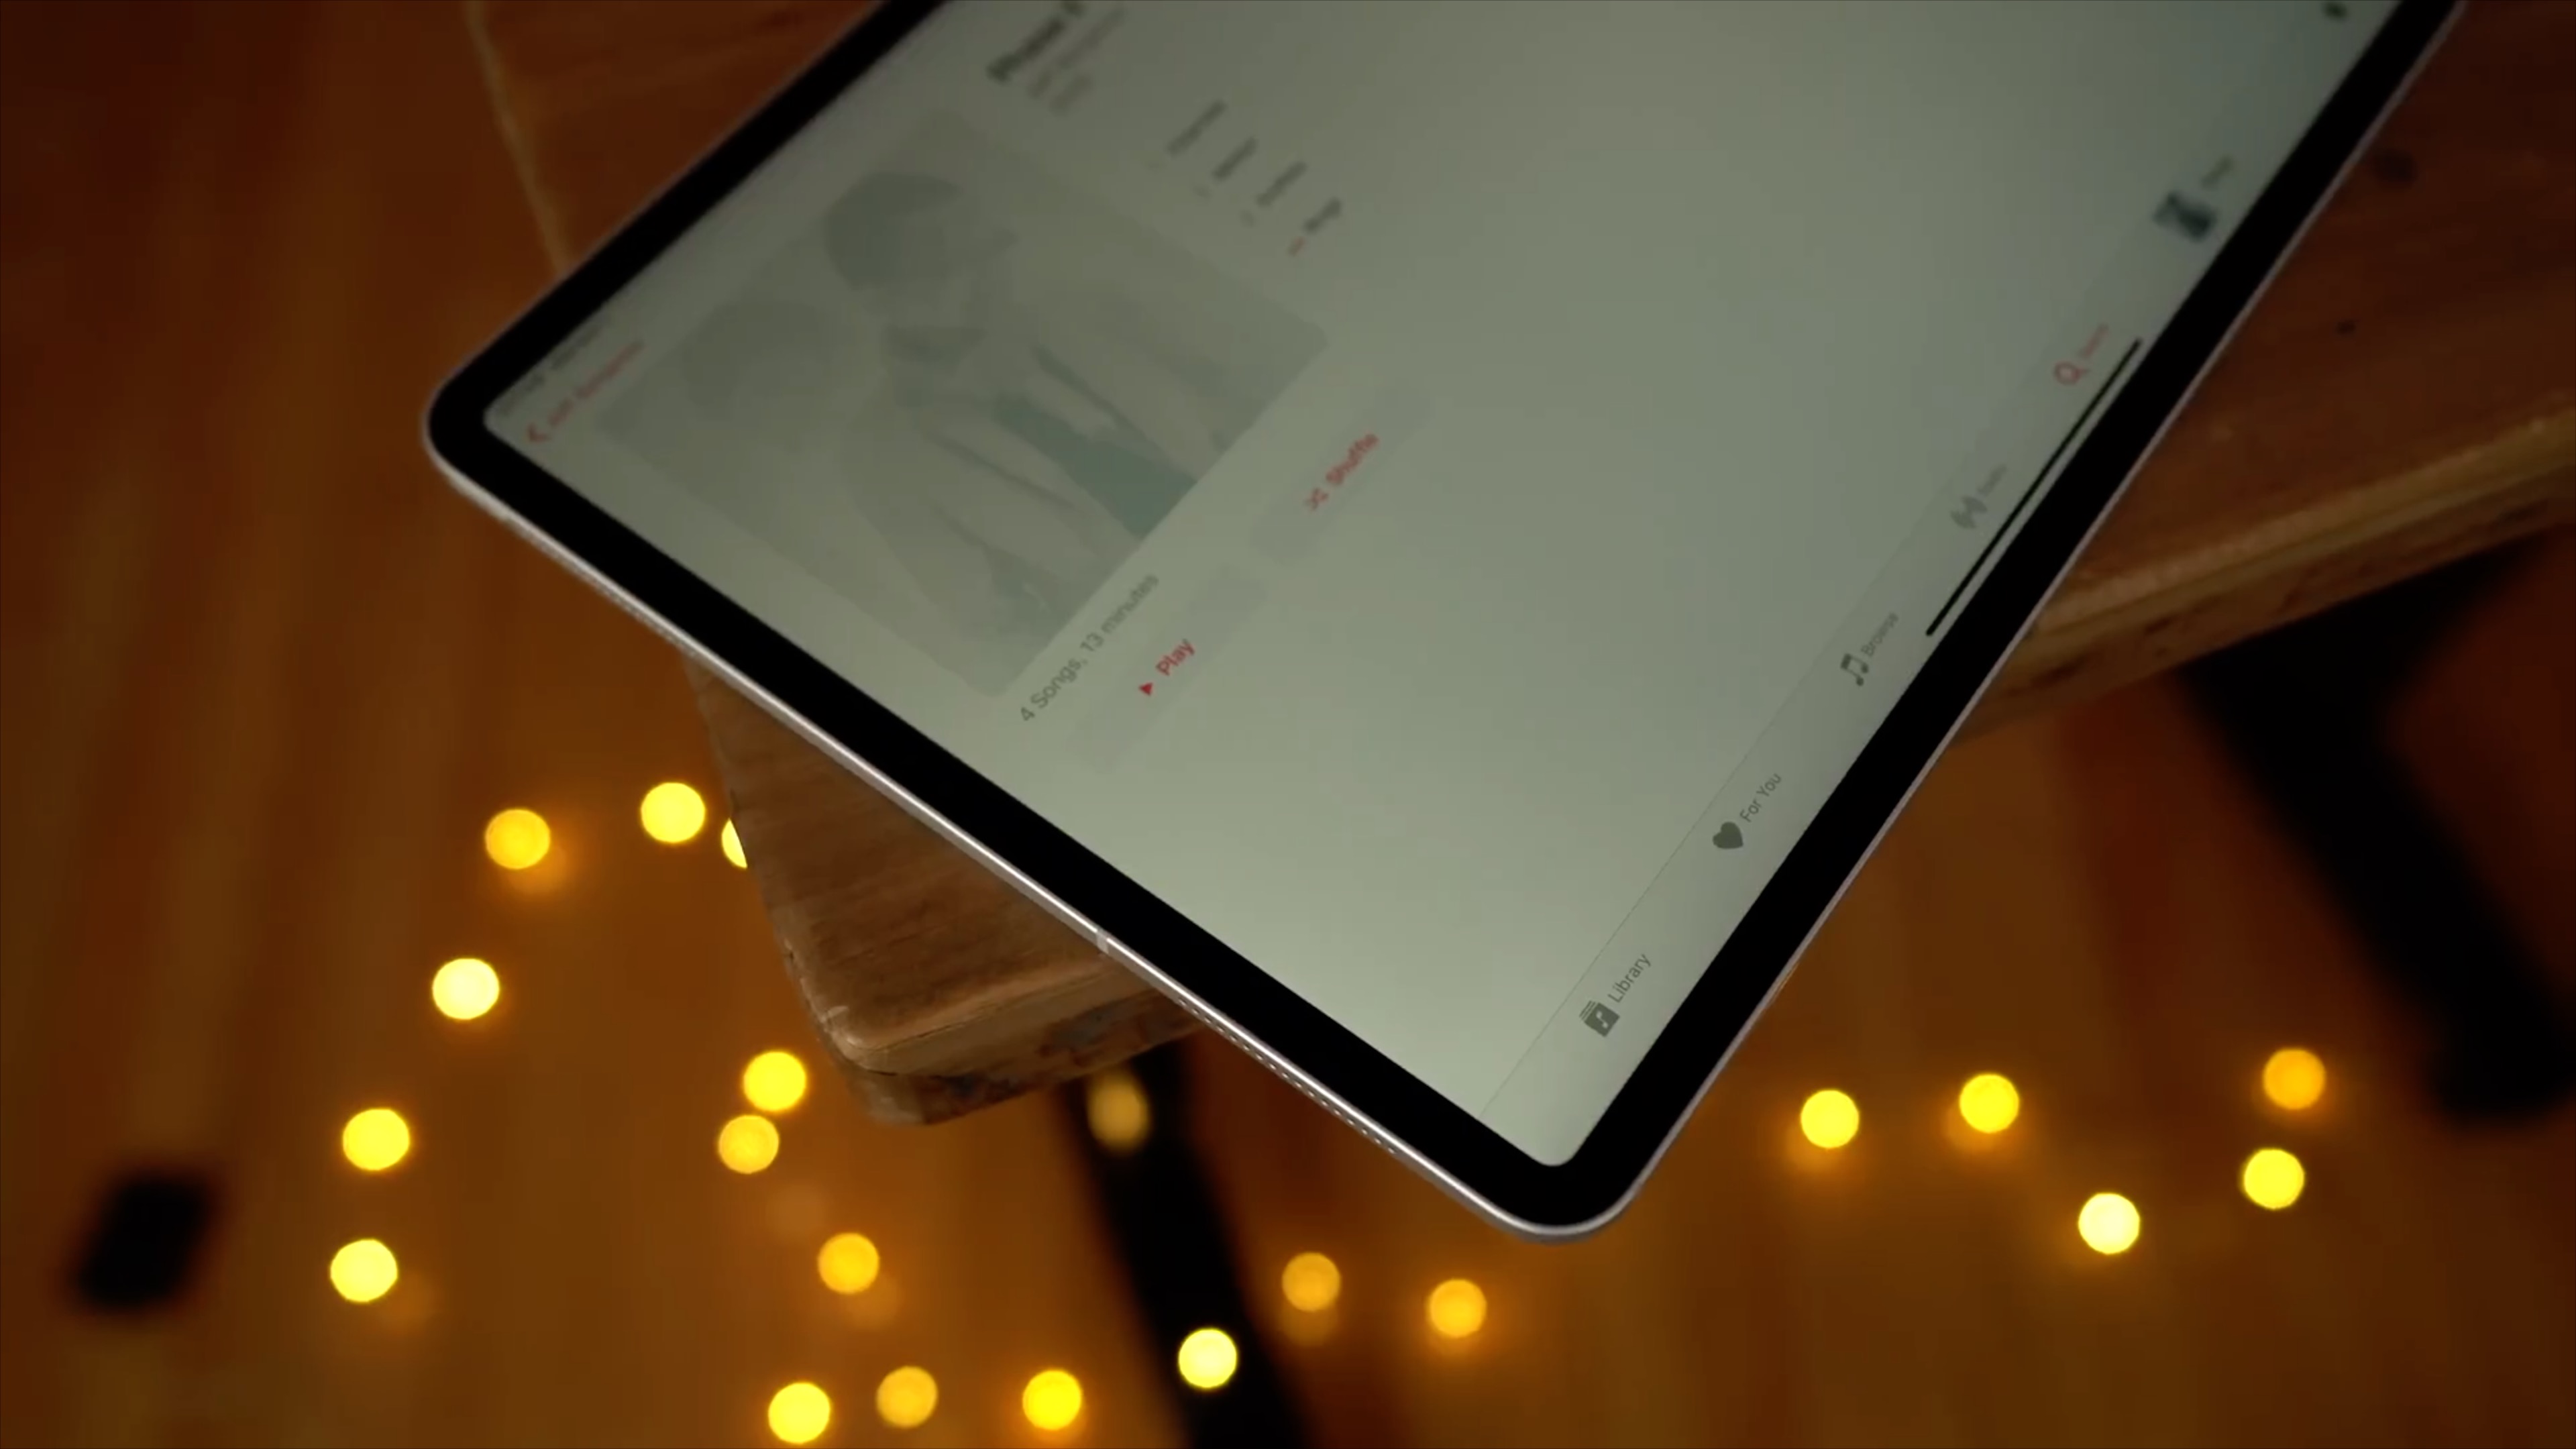 12.9-inch iPad Pro